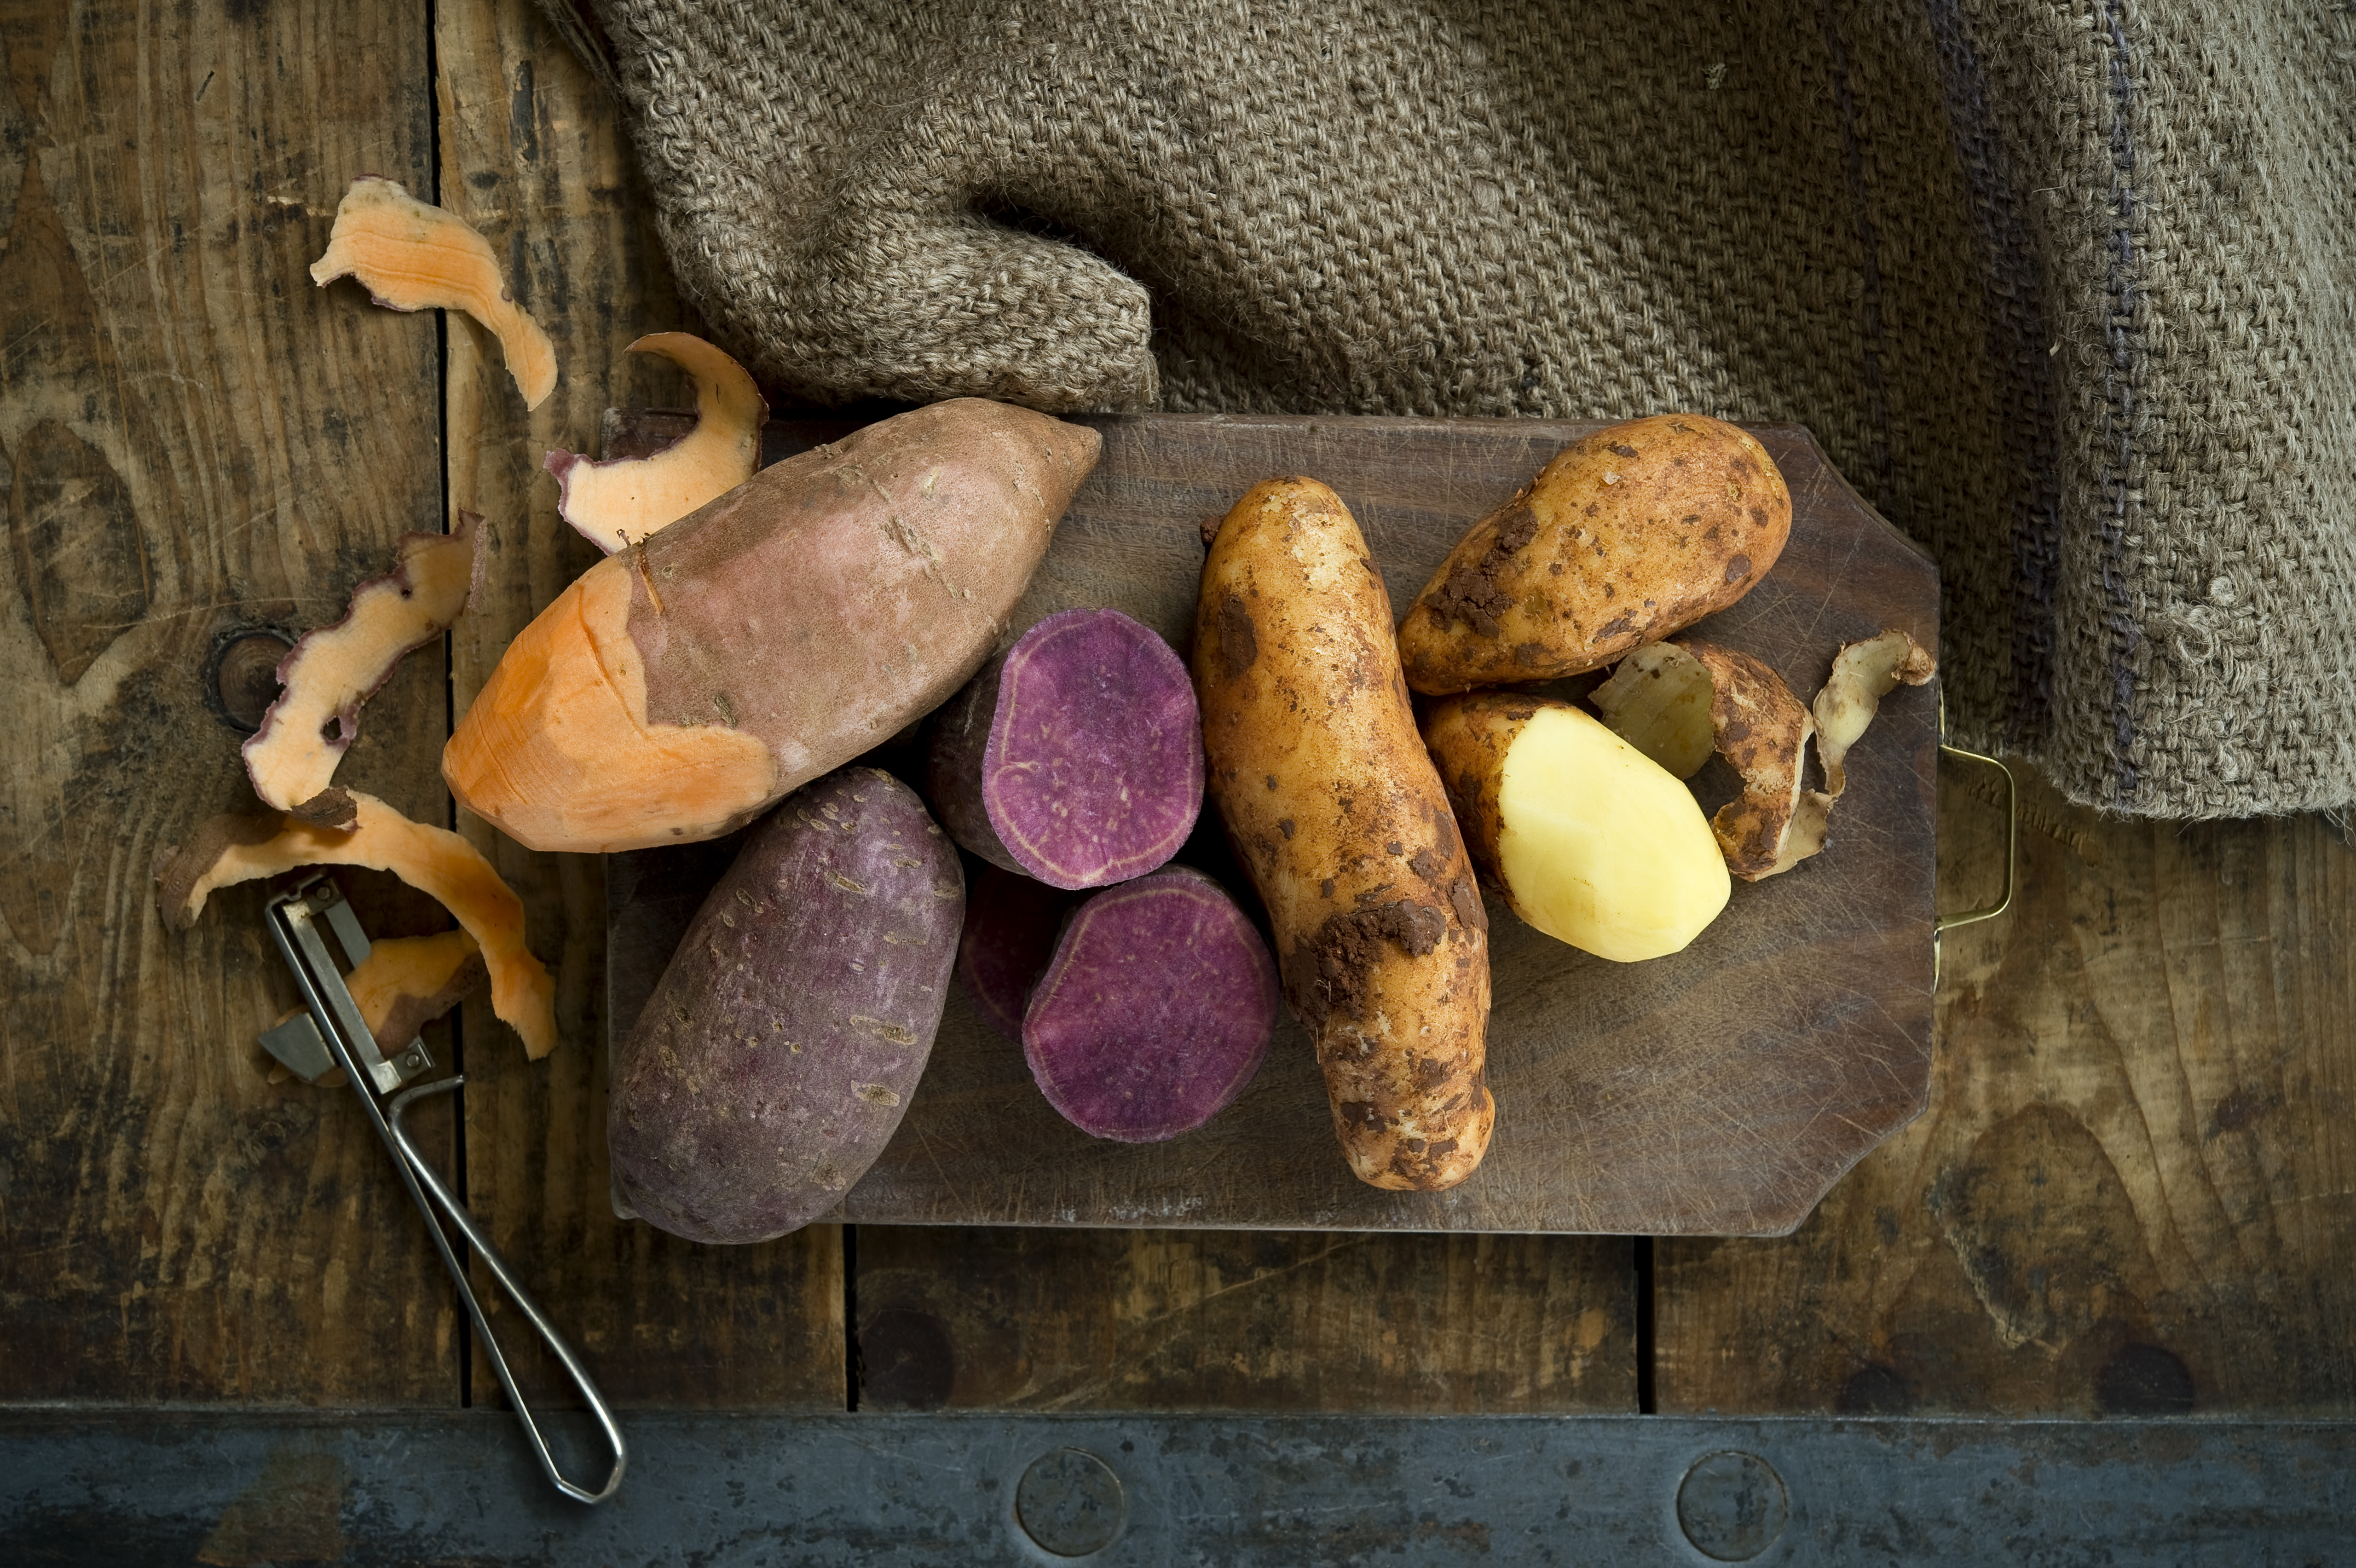 Mashed Japanese Sweet Potatoes (Purple) - eyes and hour